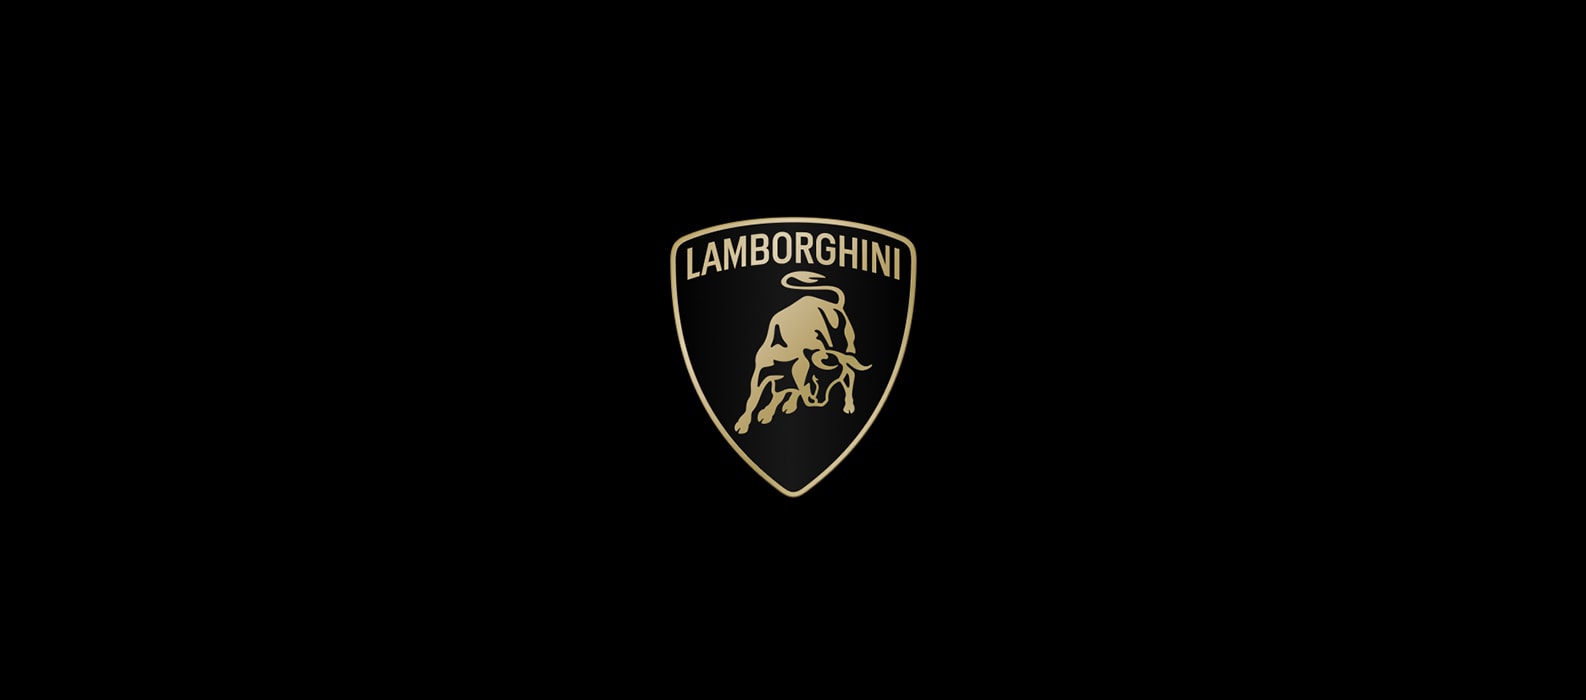 www.lamborghini.com